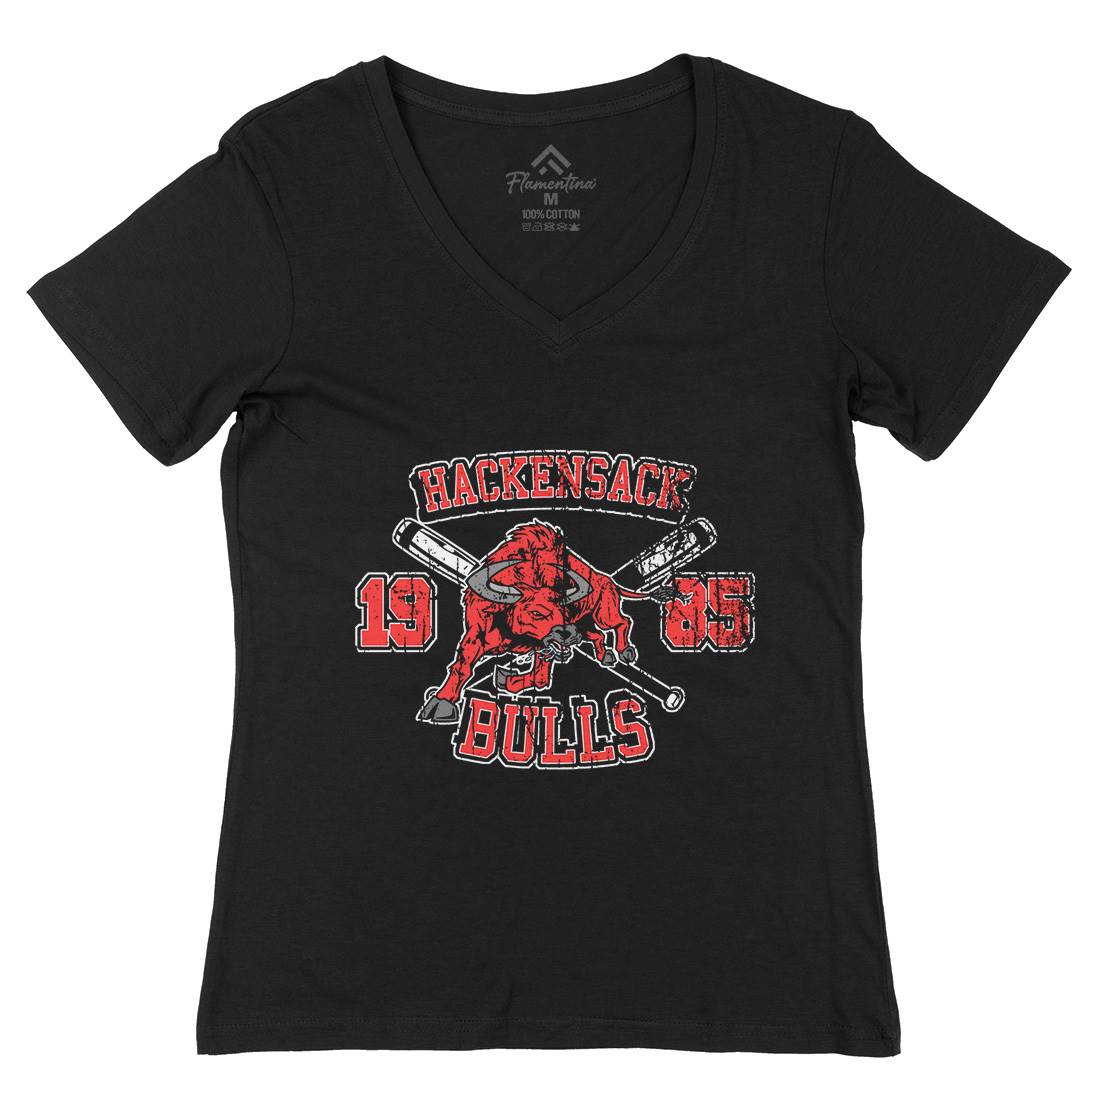 Hackensack Bulls Womens Organic V-Neck T-Shirt Sport D121